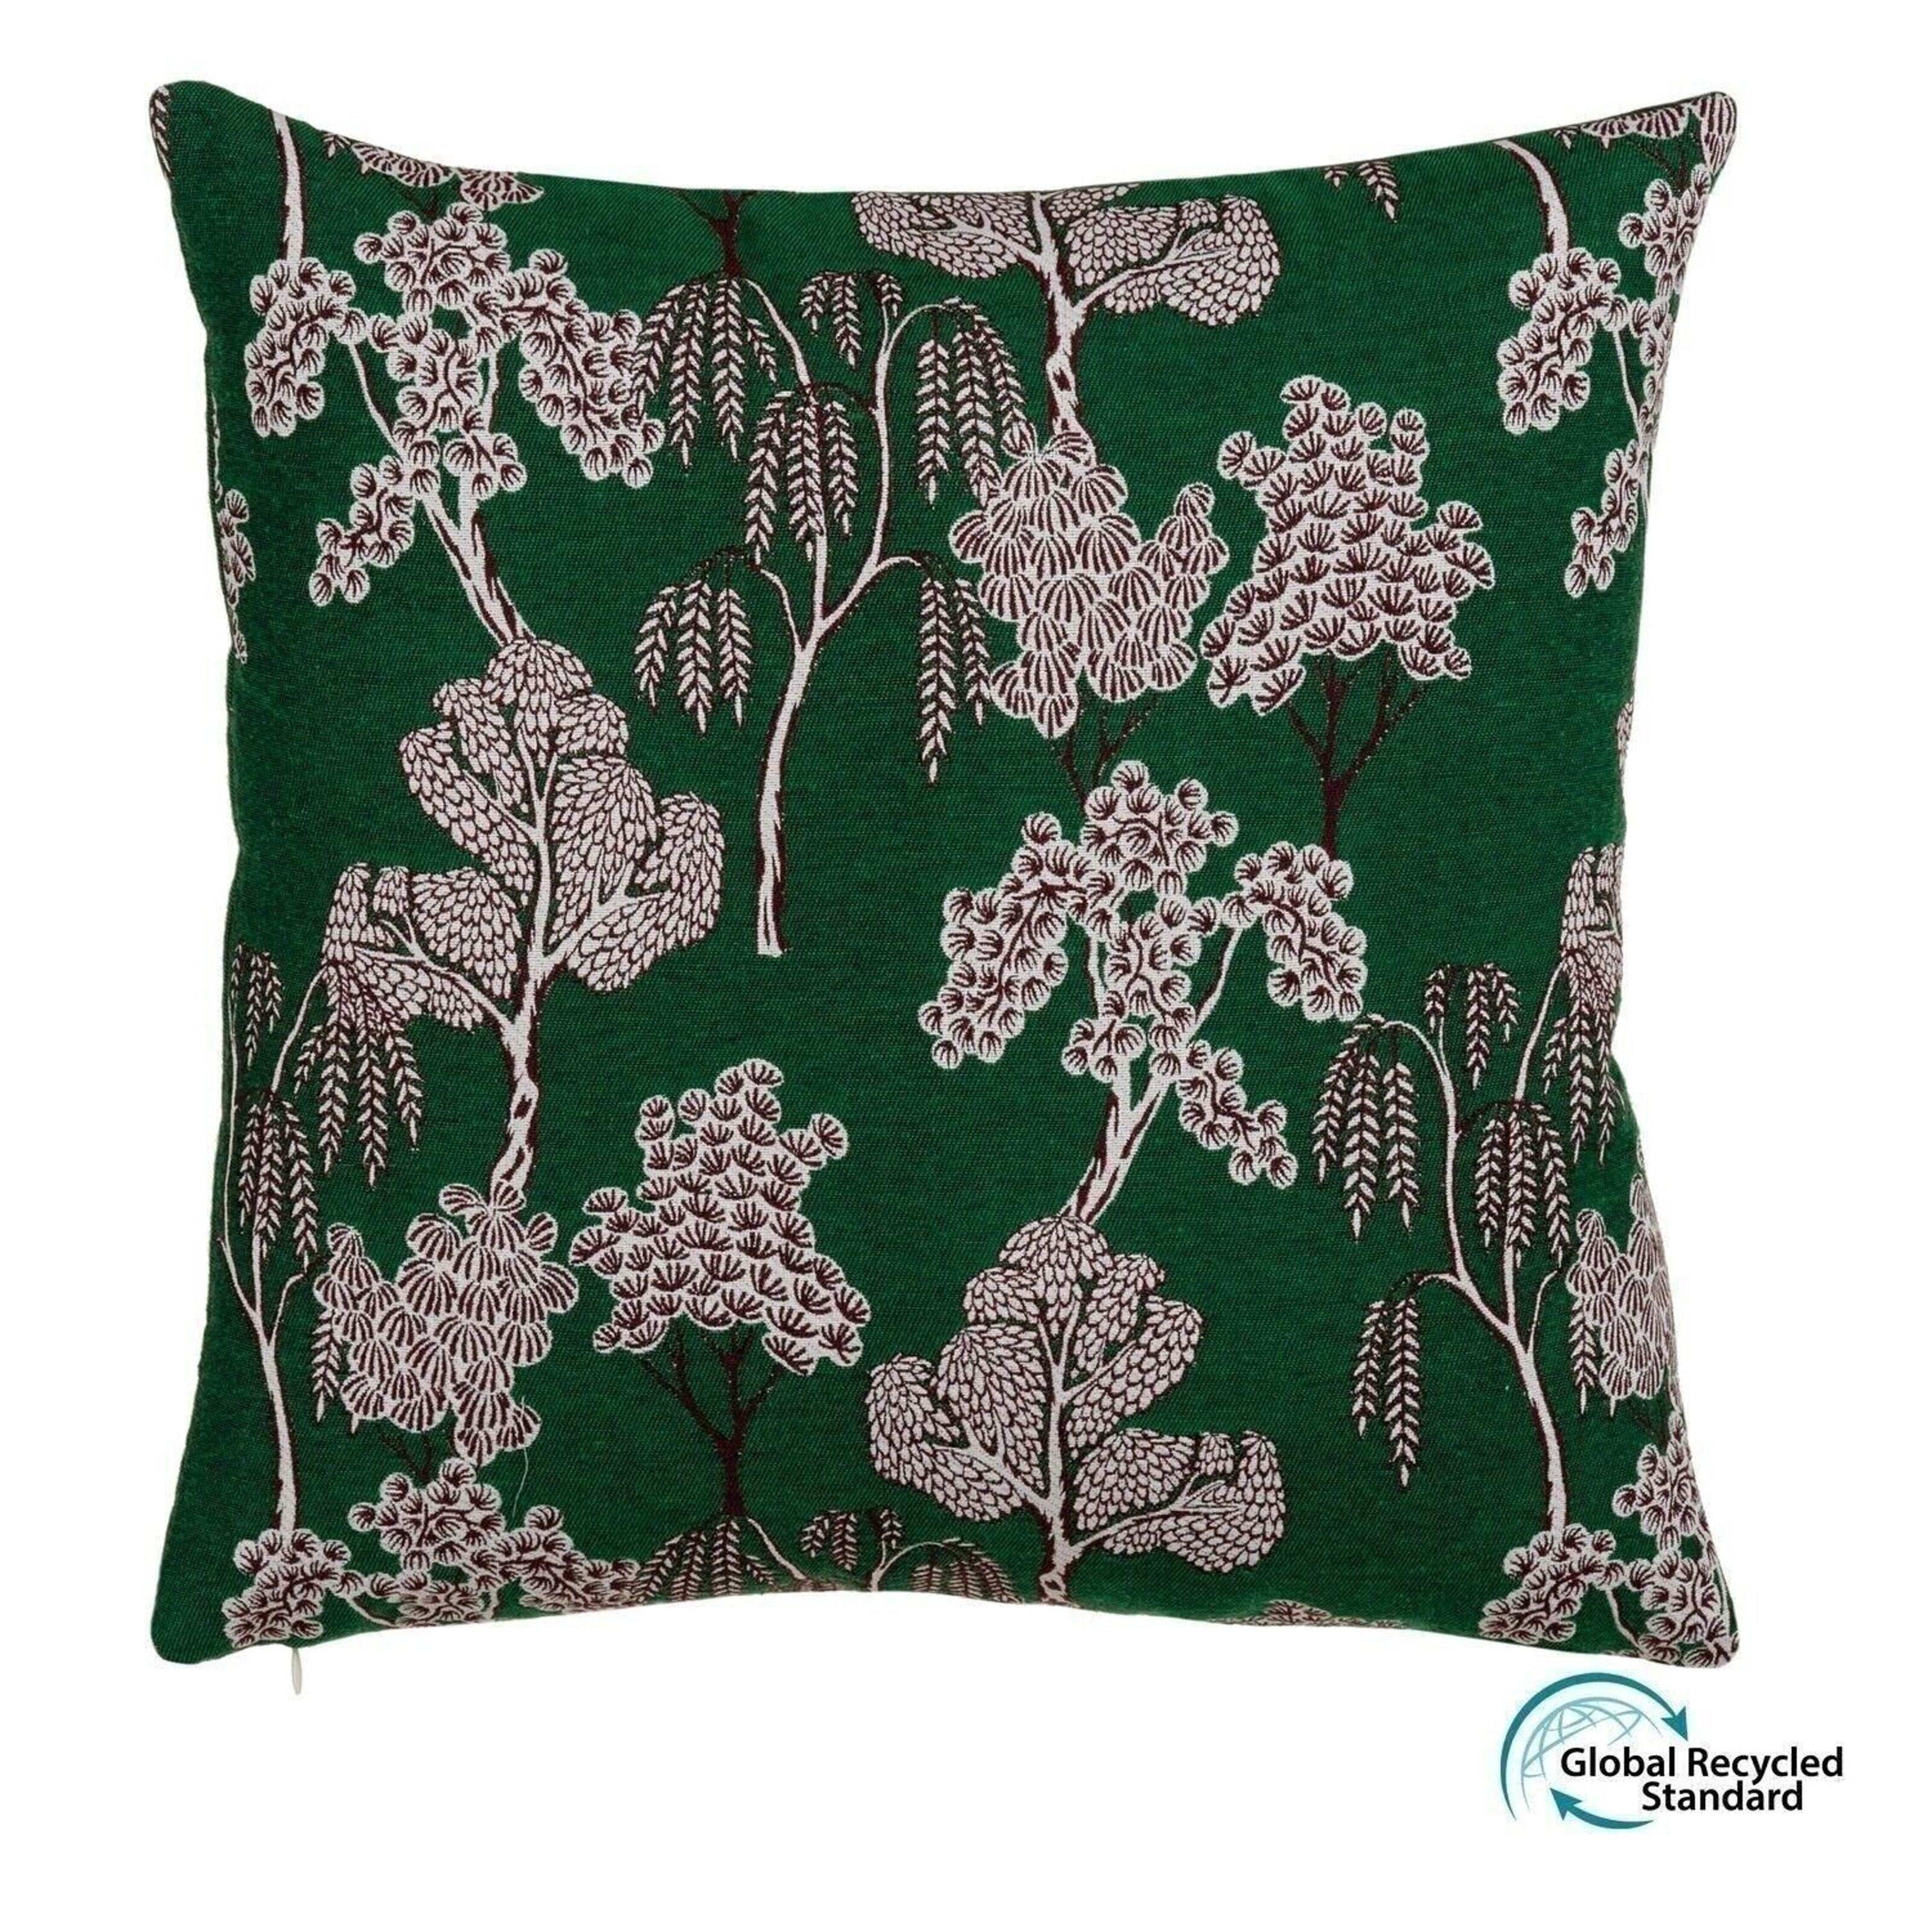 Buy 150x60x20cm Cushion Long Cushion Backrest Pillows Bed Cotton Pillow  Soft Cushion by Just Green Tech on Dot & Bo